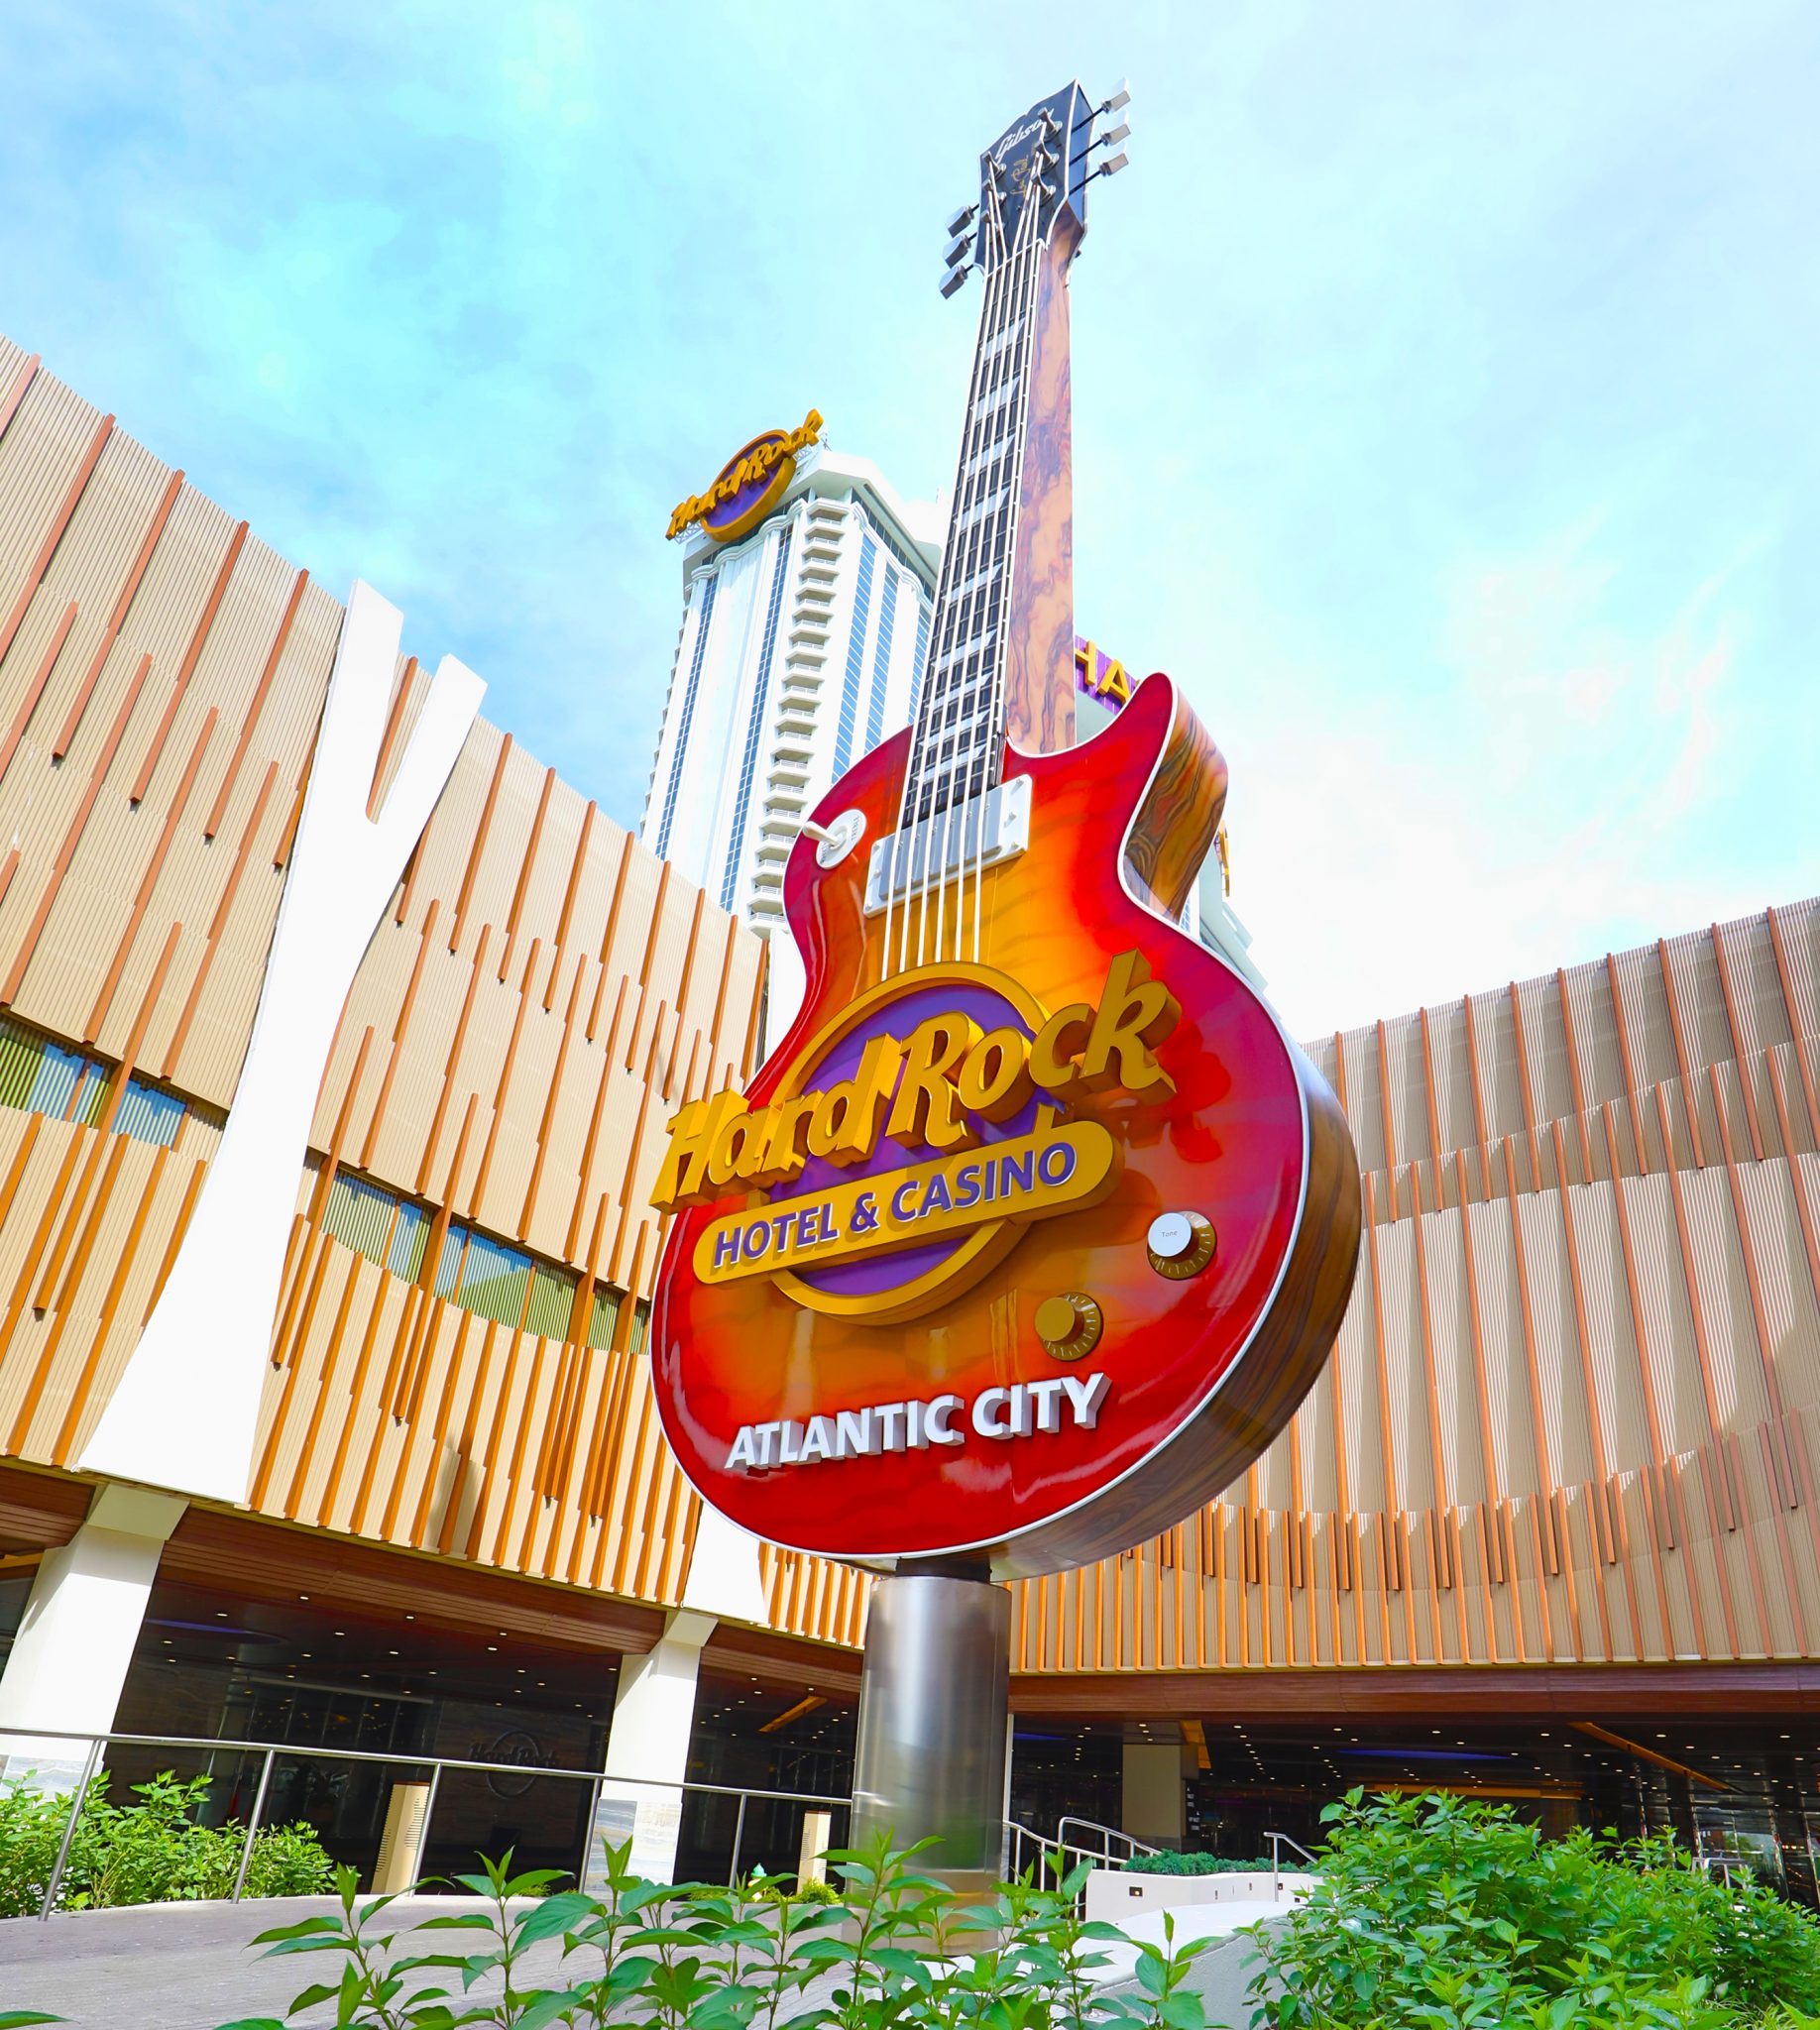 hard rock casino atlantic city grand opening